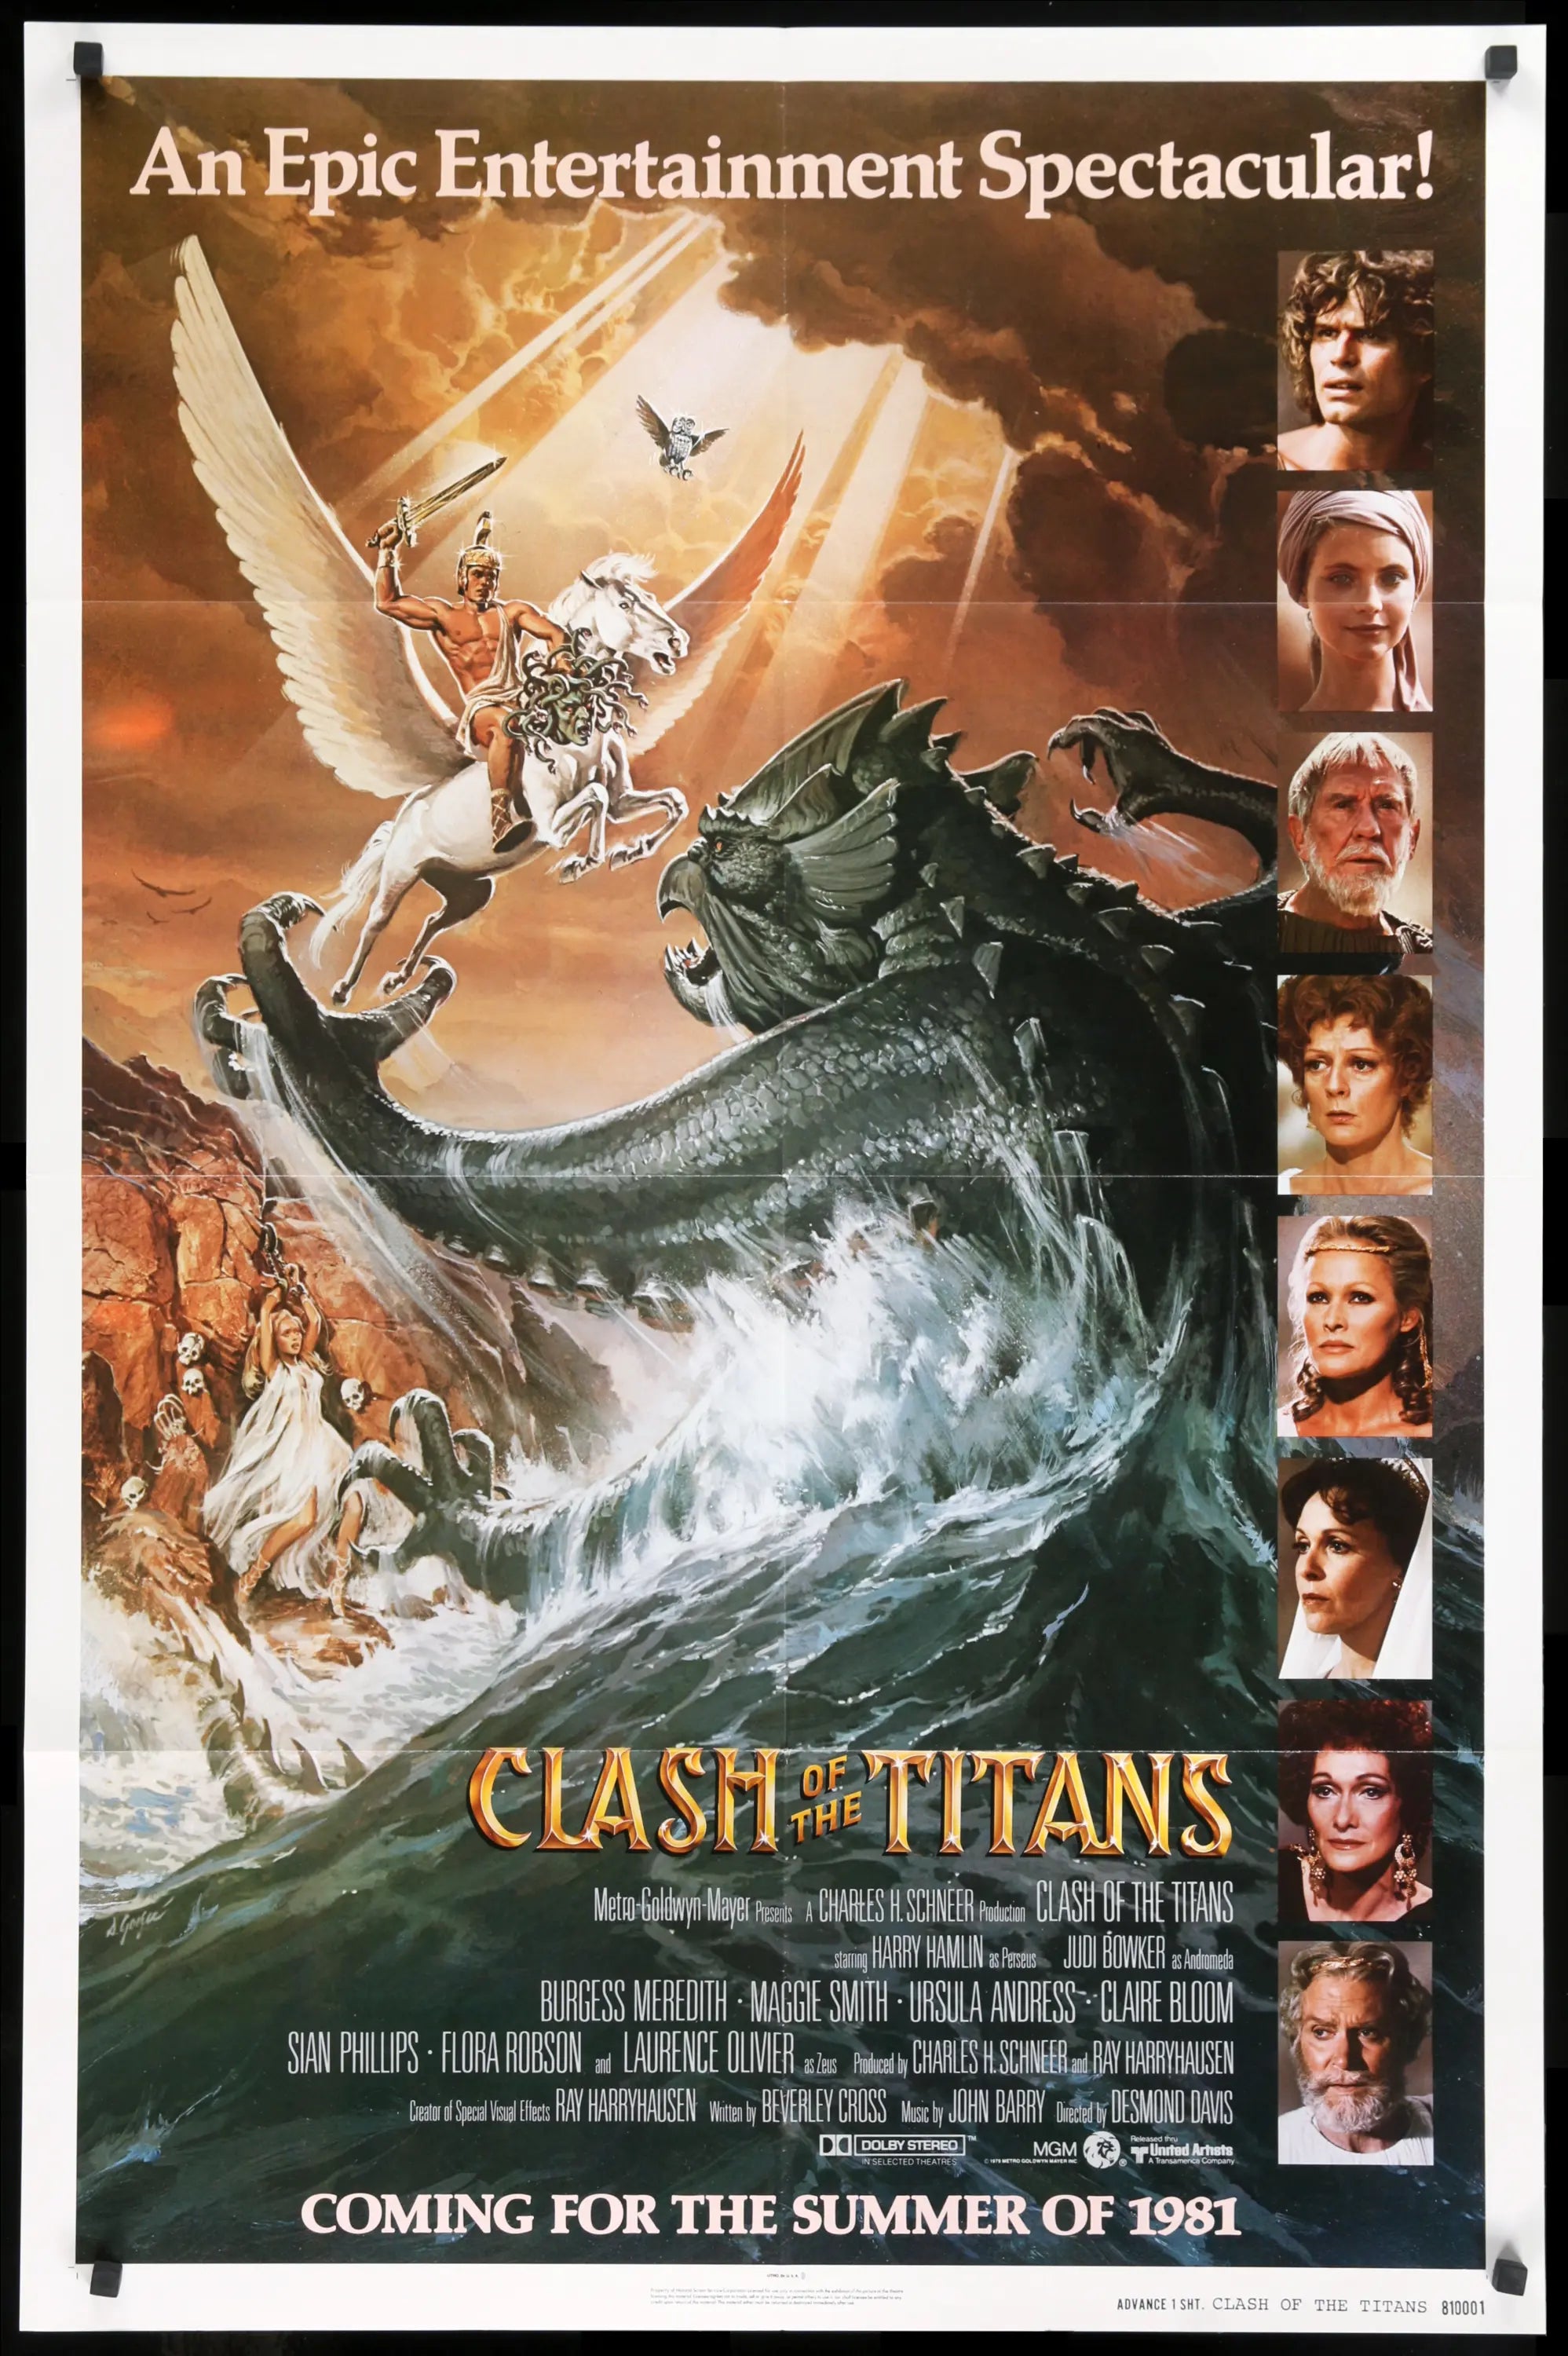  Clash of the Titans (1981) : Harry Hamlin, Judi Bowker